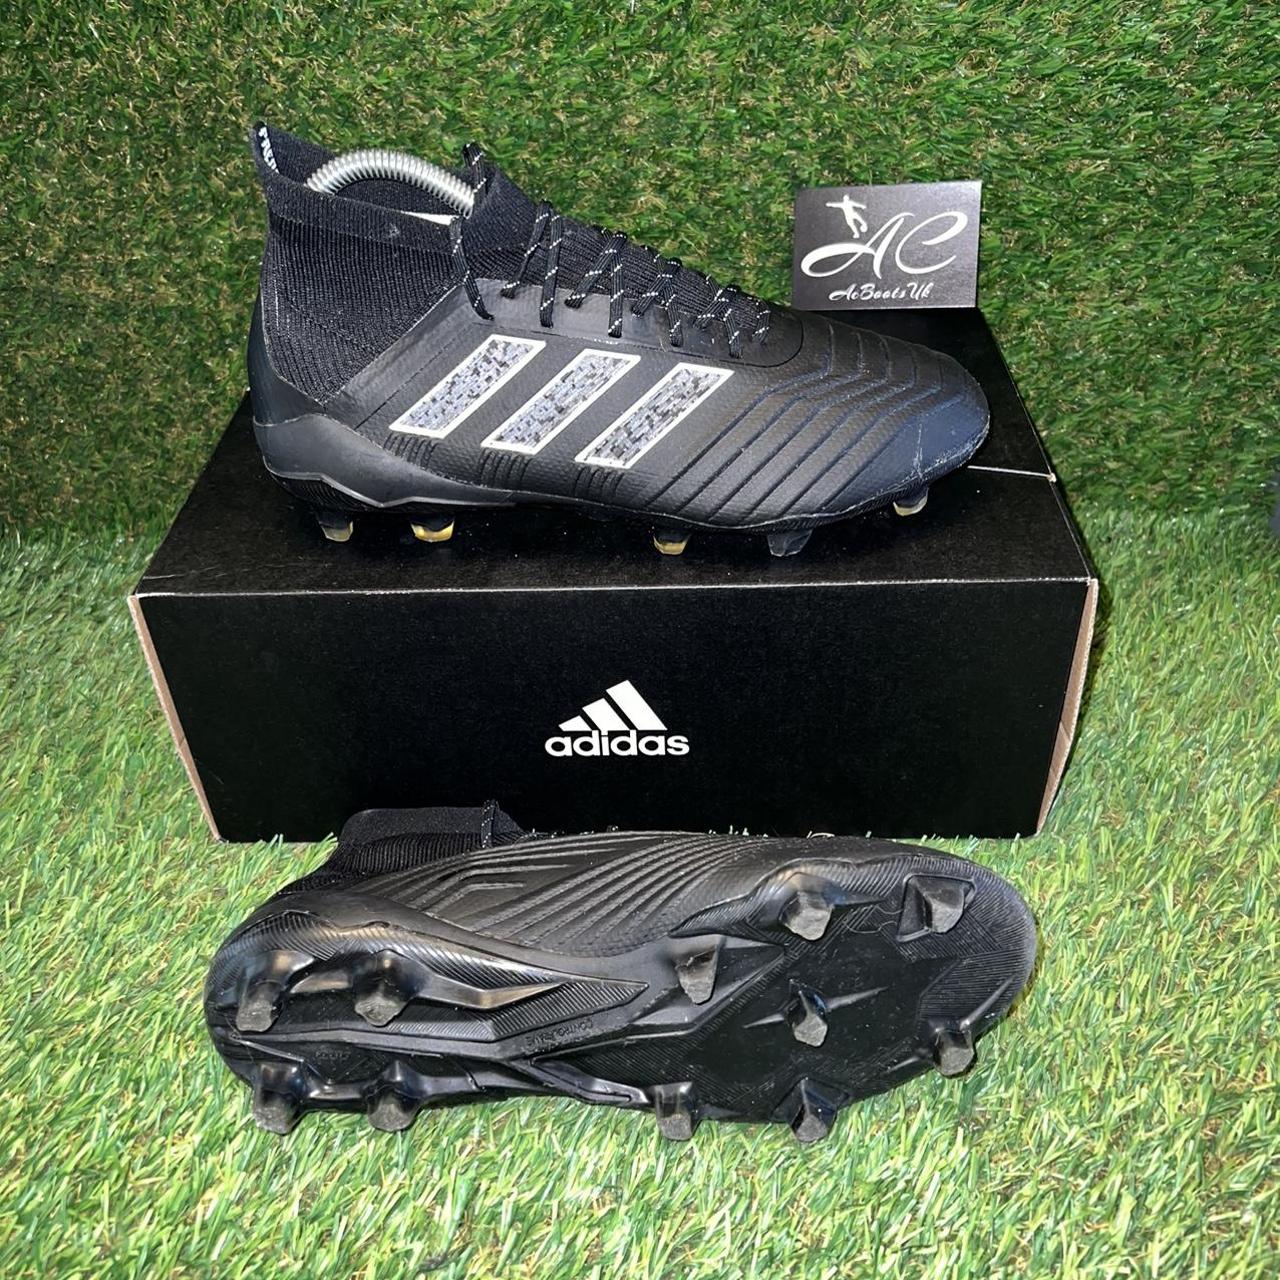 Adidas Predator 19.1 FG Football Boots Size Uk... - Depop